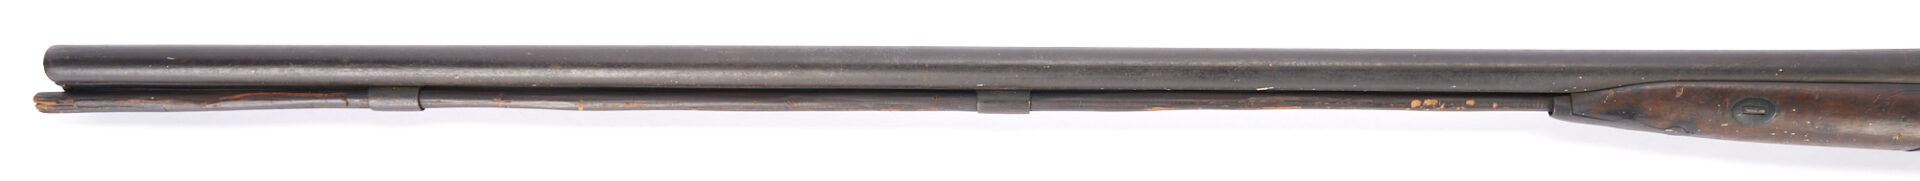 Lot 529: 19th C. Percussion Rifle & Double Barrel Percussion Shotgun; Walter Cline Collection